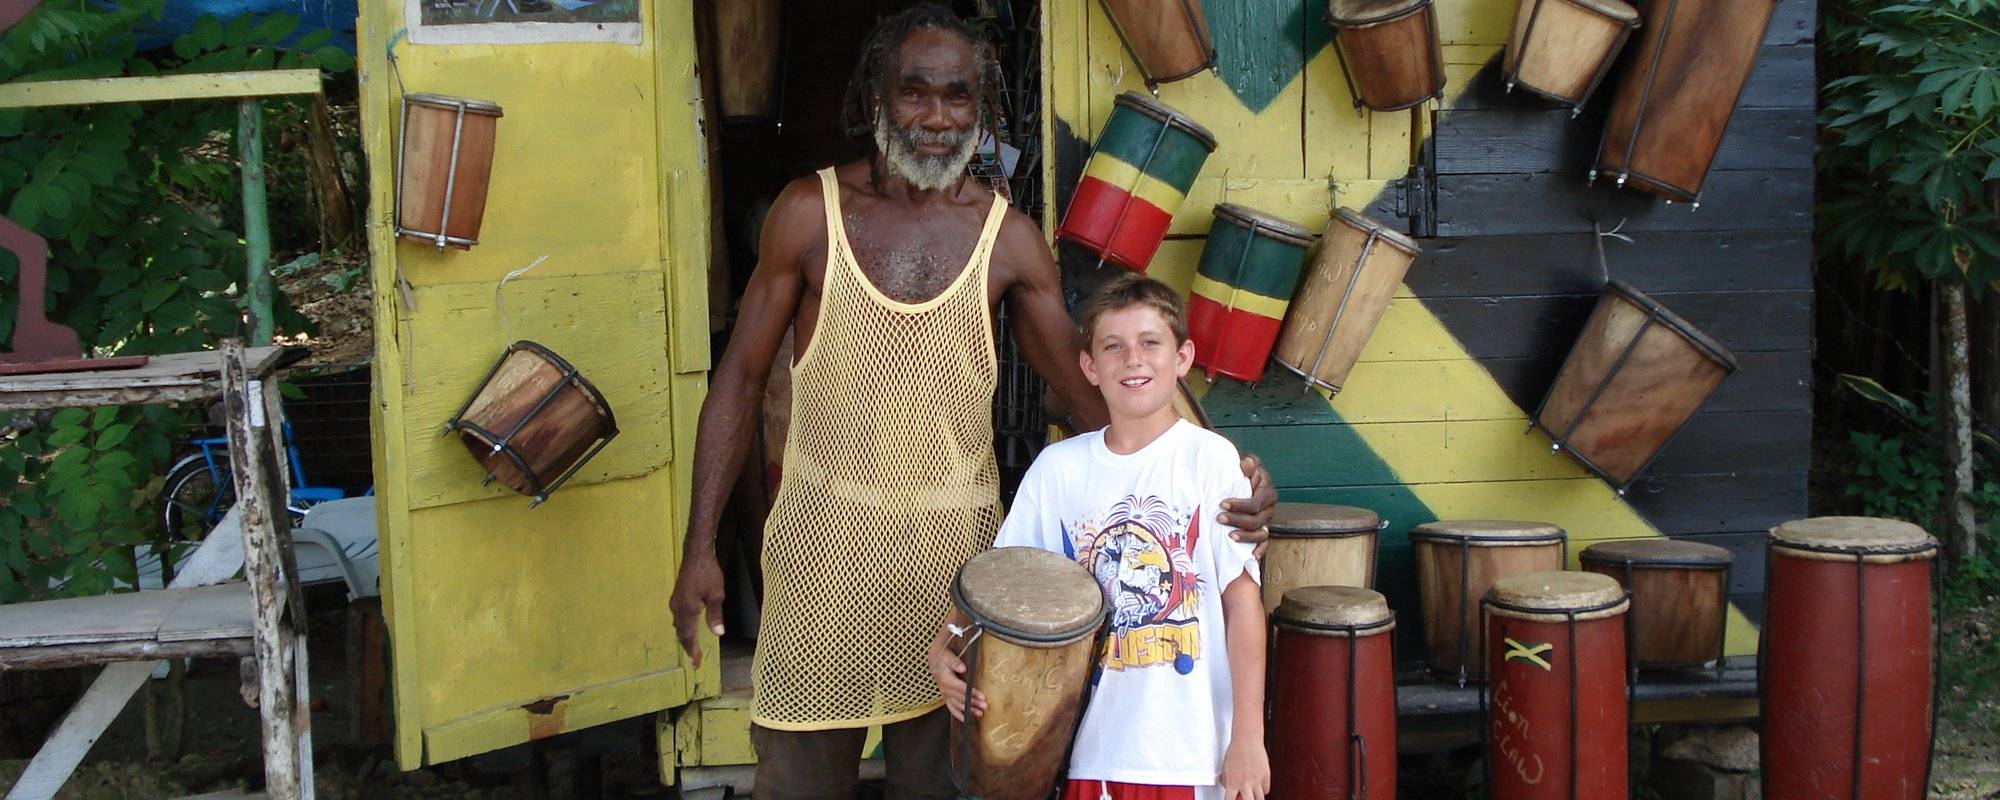 Faces of Jamaica [Part 9 of 10] Lloyd the "Bongo Man"